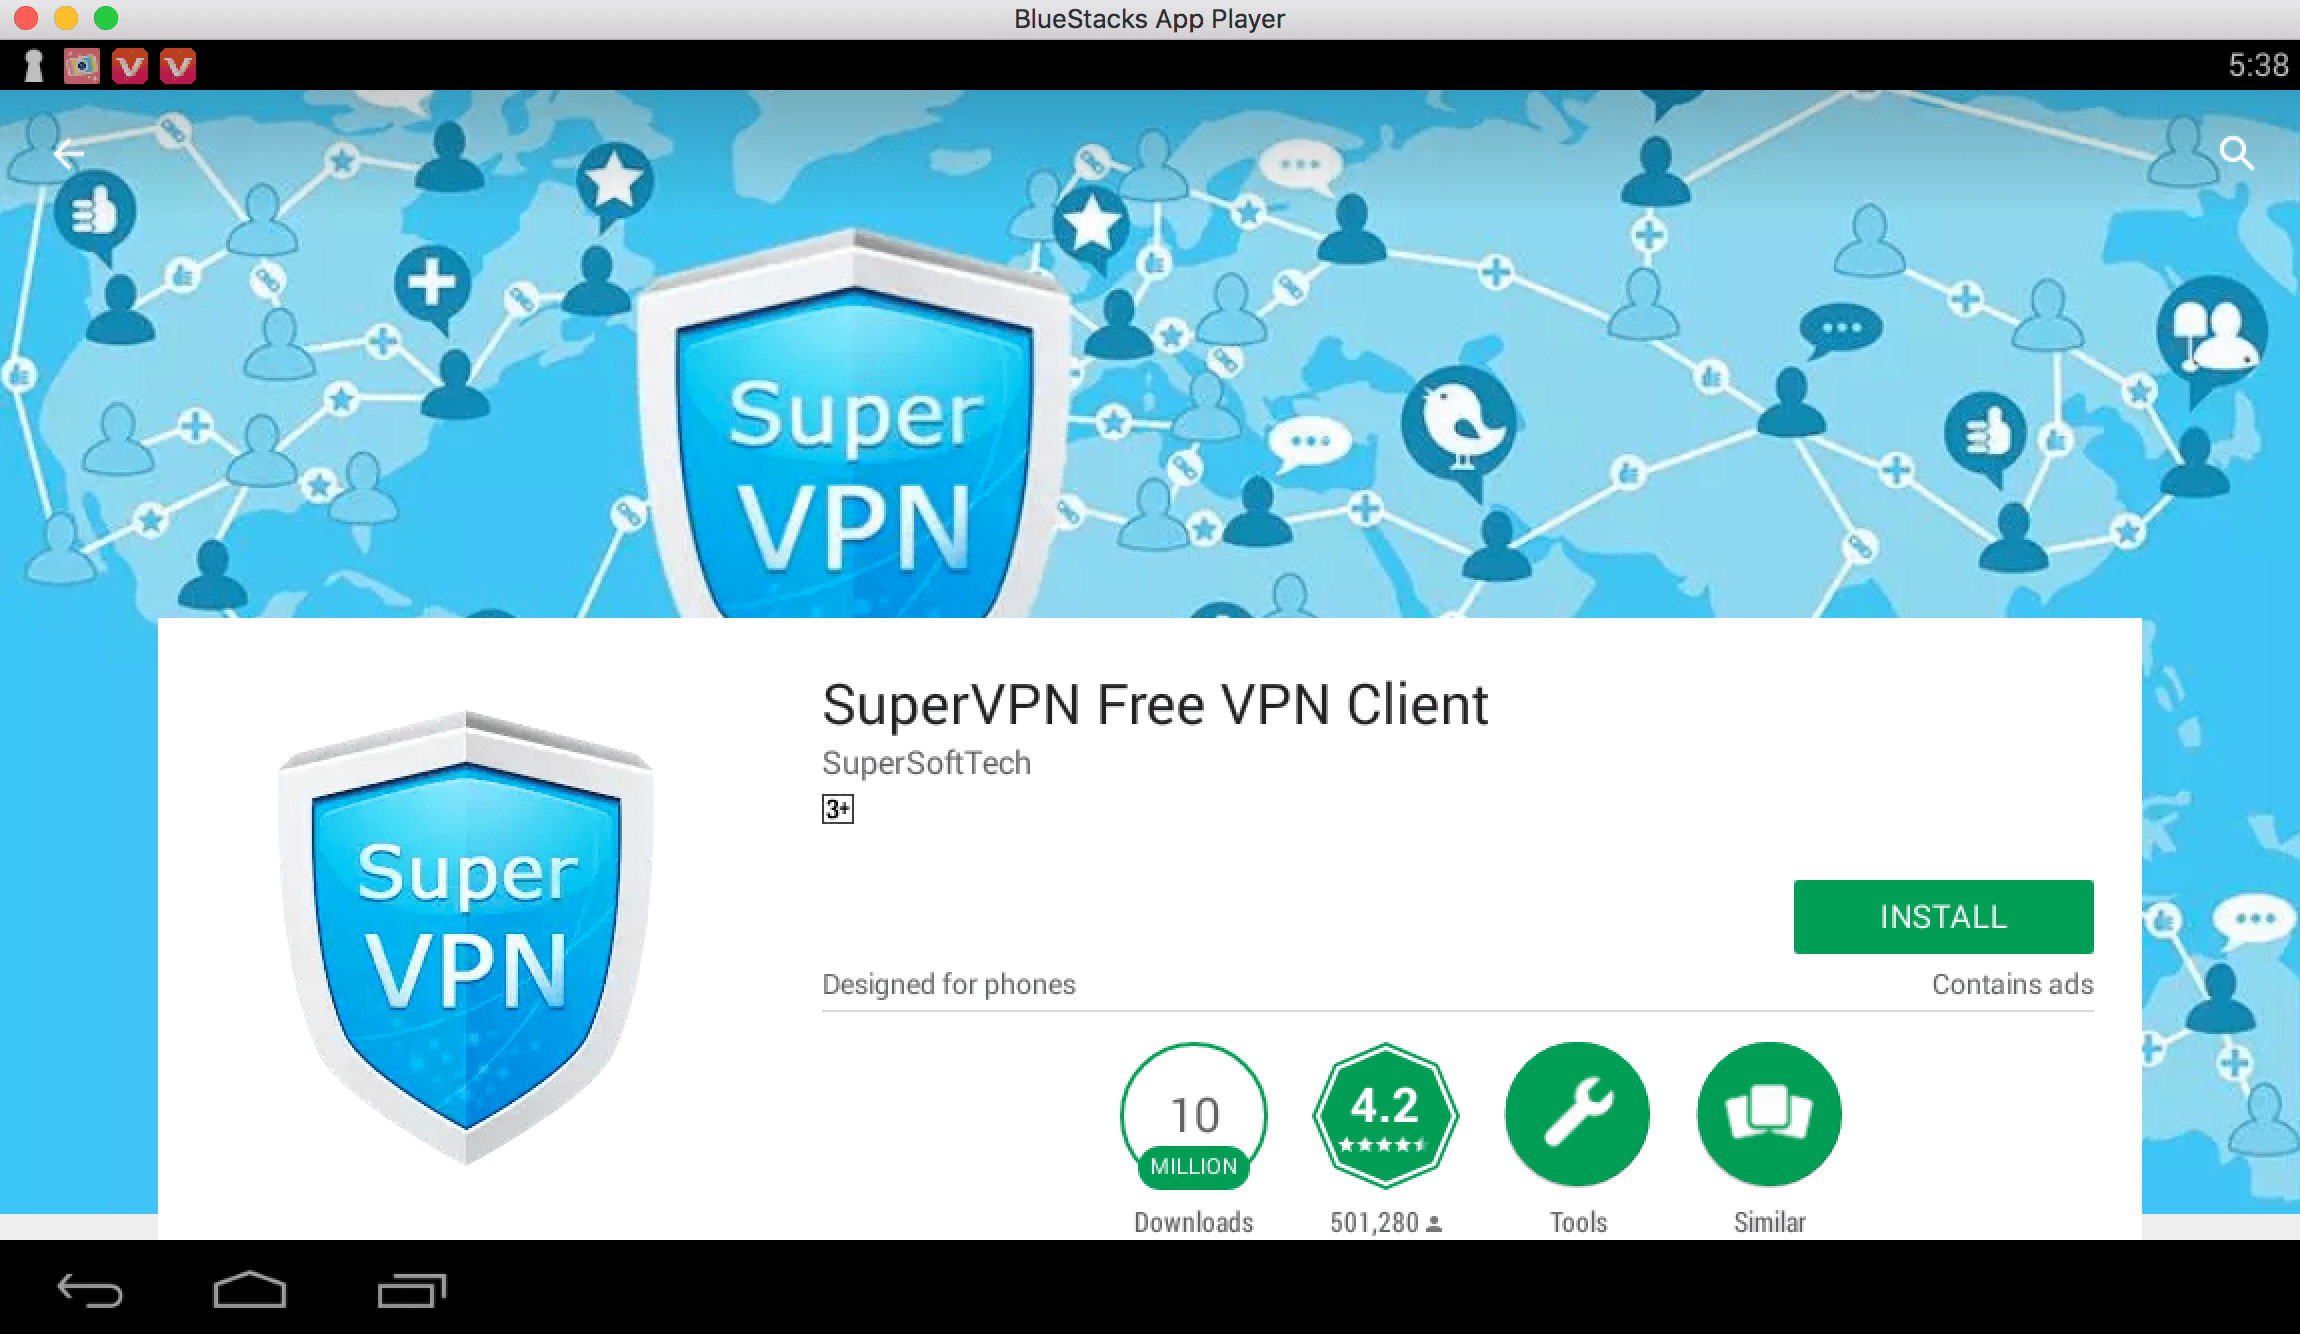 Super VPN for PC Download - Windows - Laptop - Mac